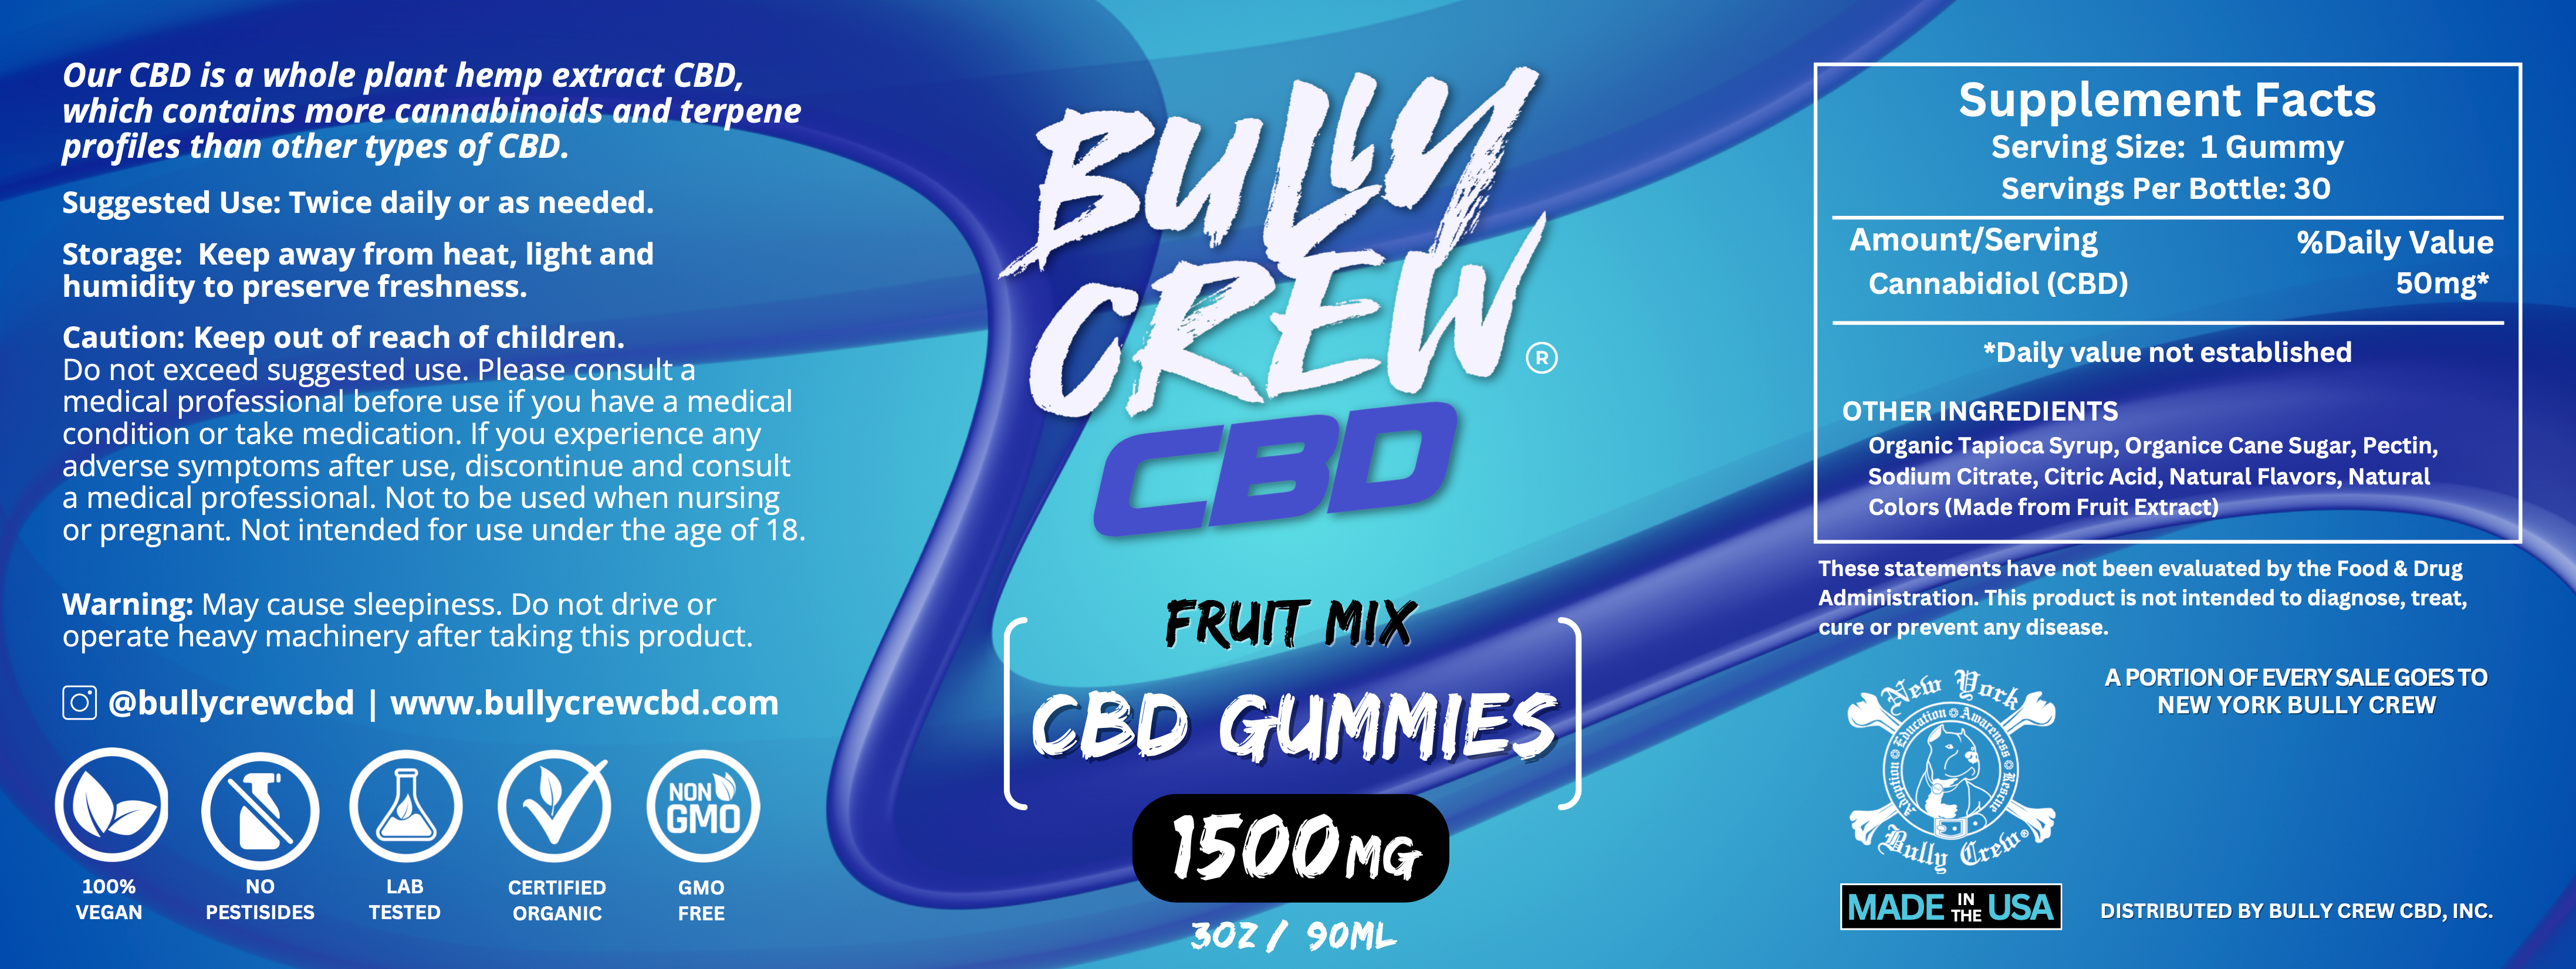 1500mg CBD Gummies - 30 Count